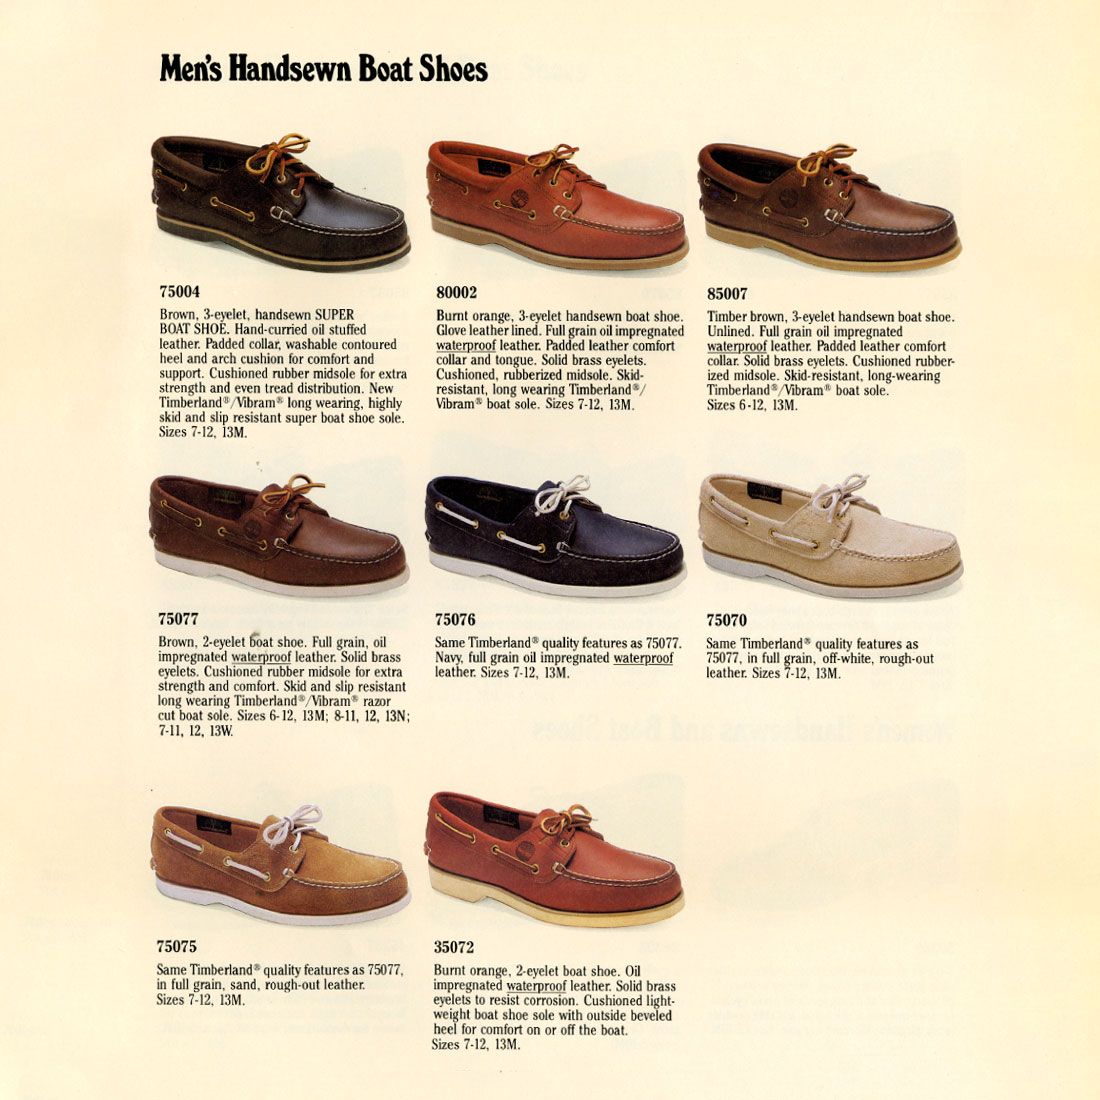 Timberland Boat Shoes 1983 Catalogue